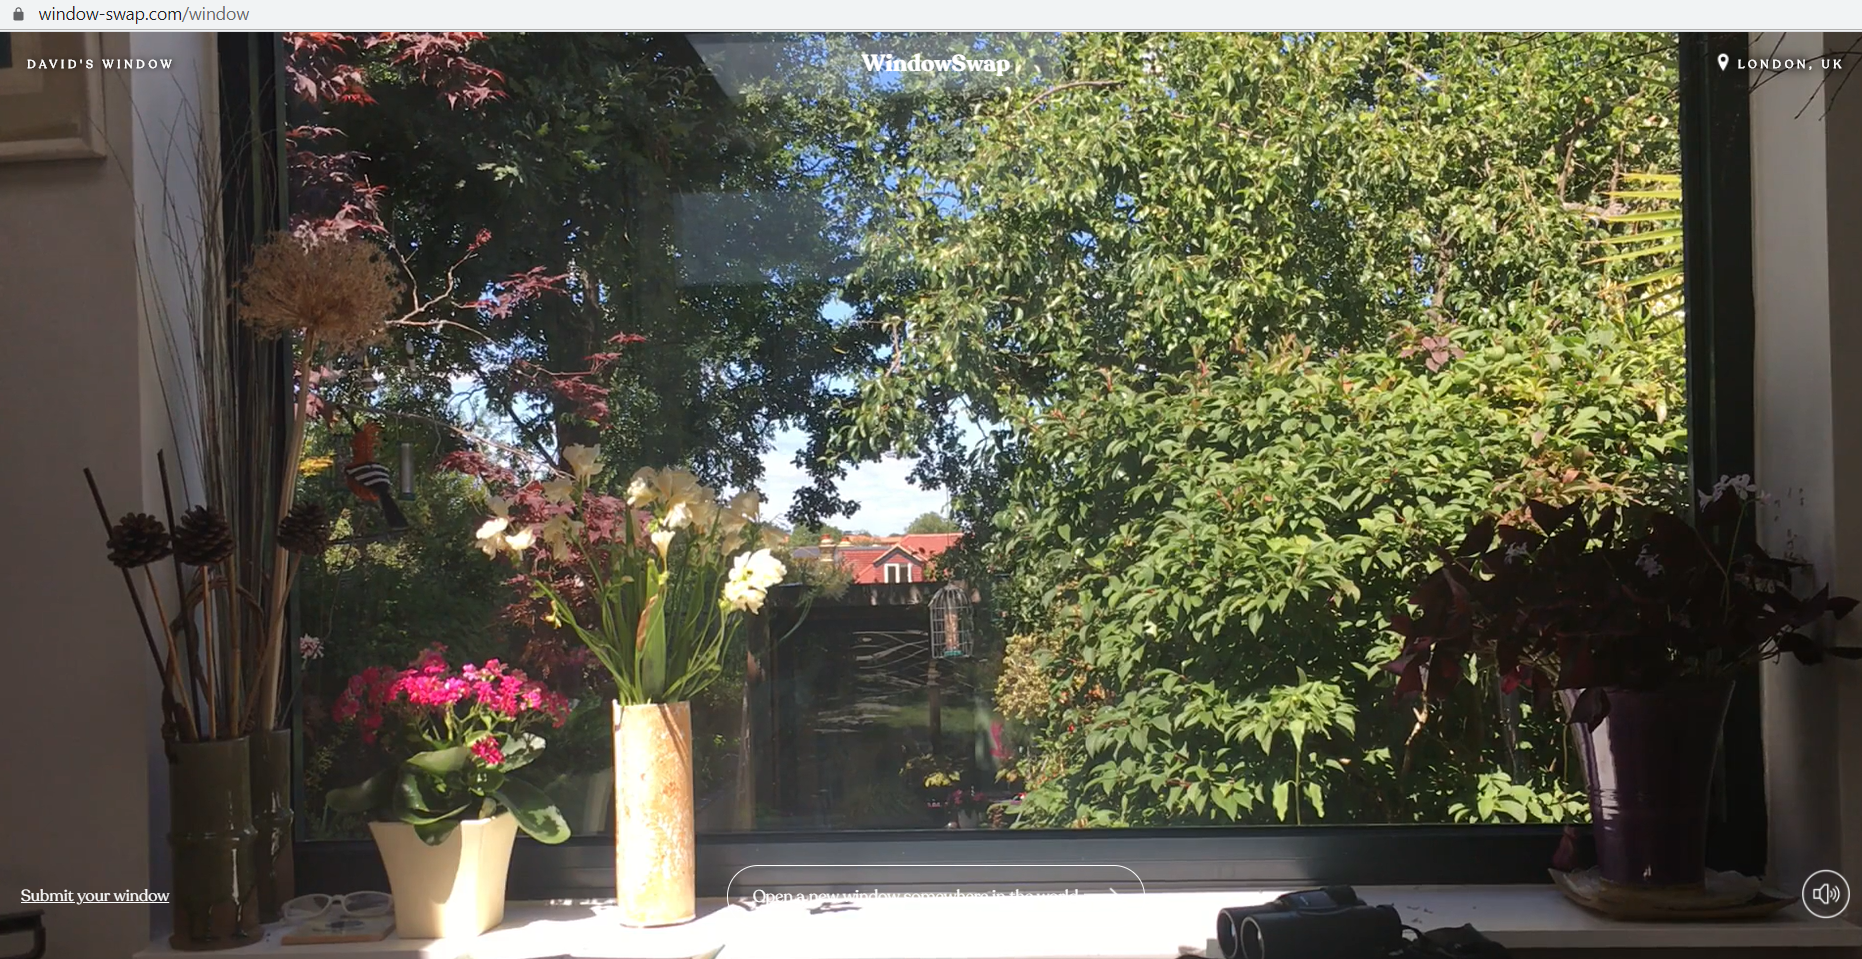 pencere1 Window-Swap - Look Through Someone Else's Window pandemy